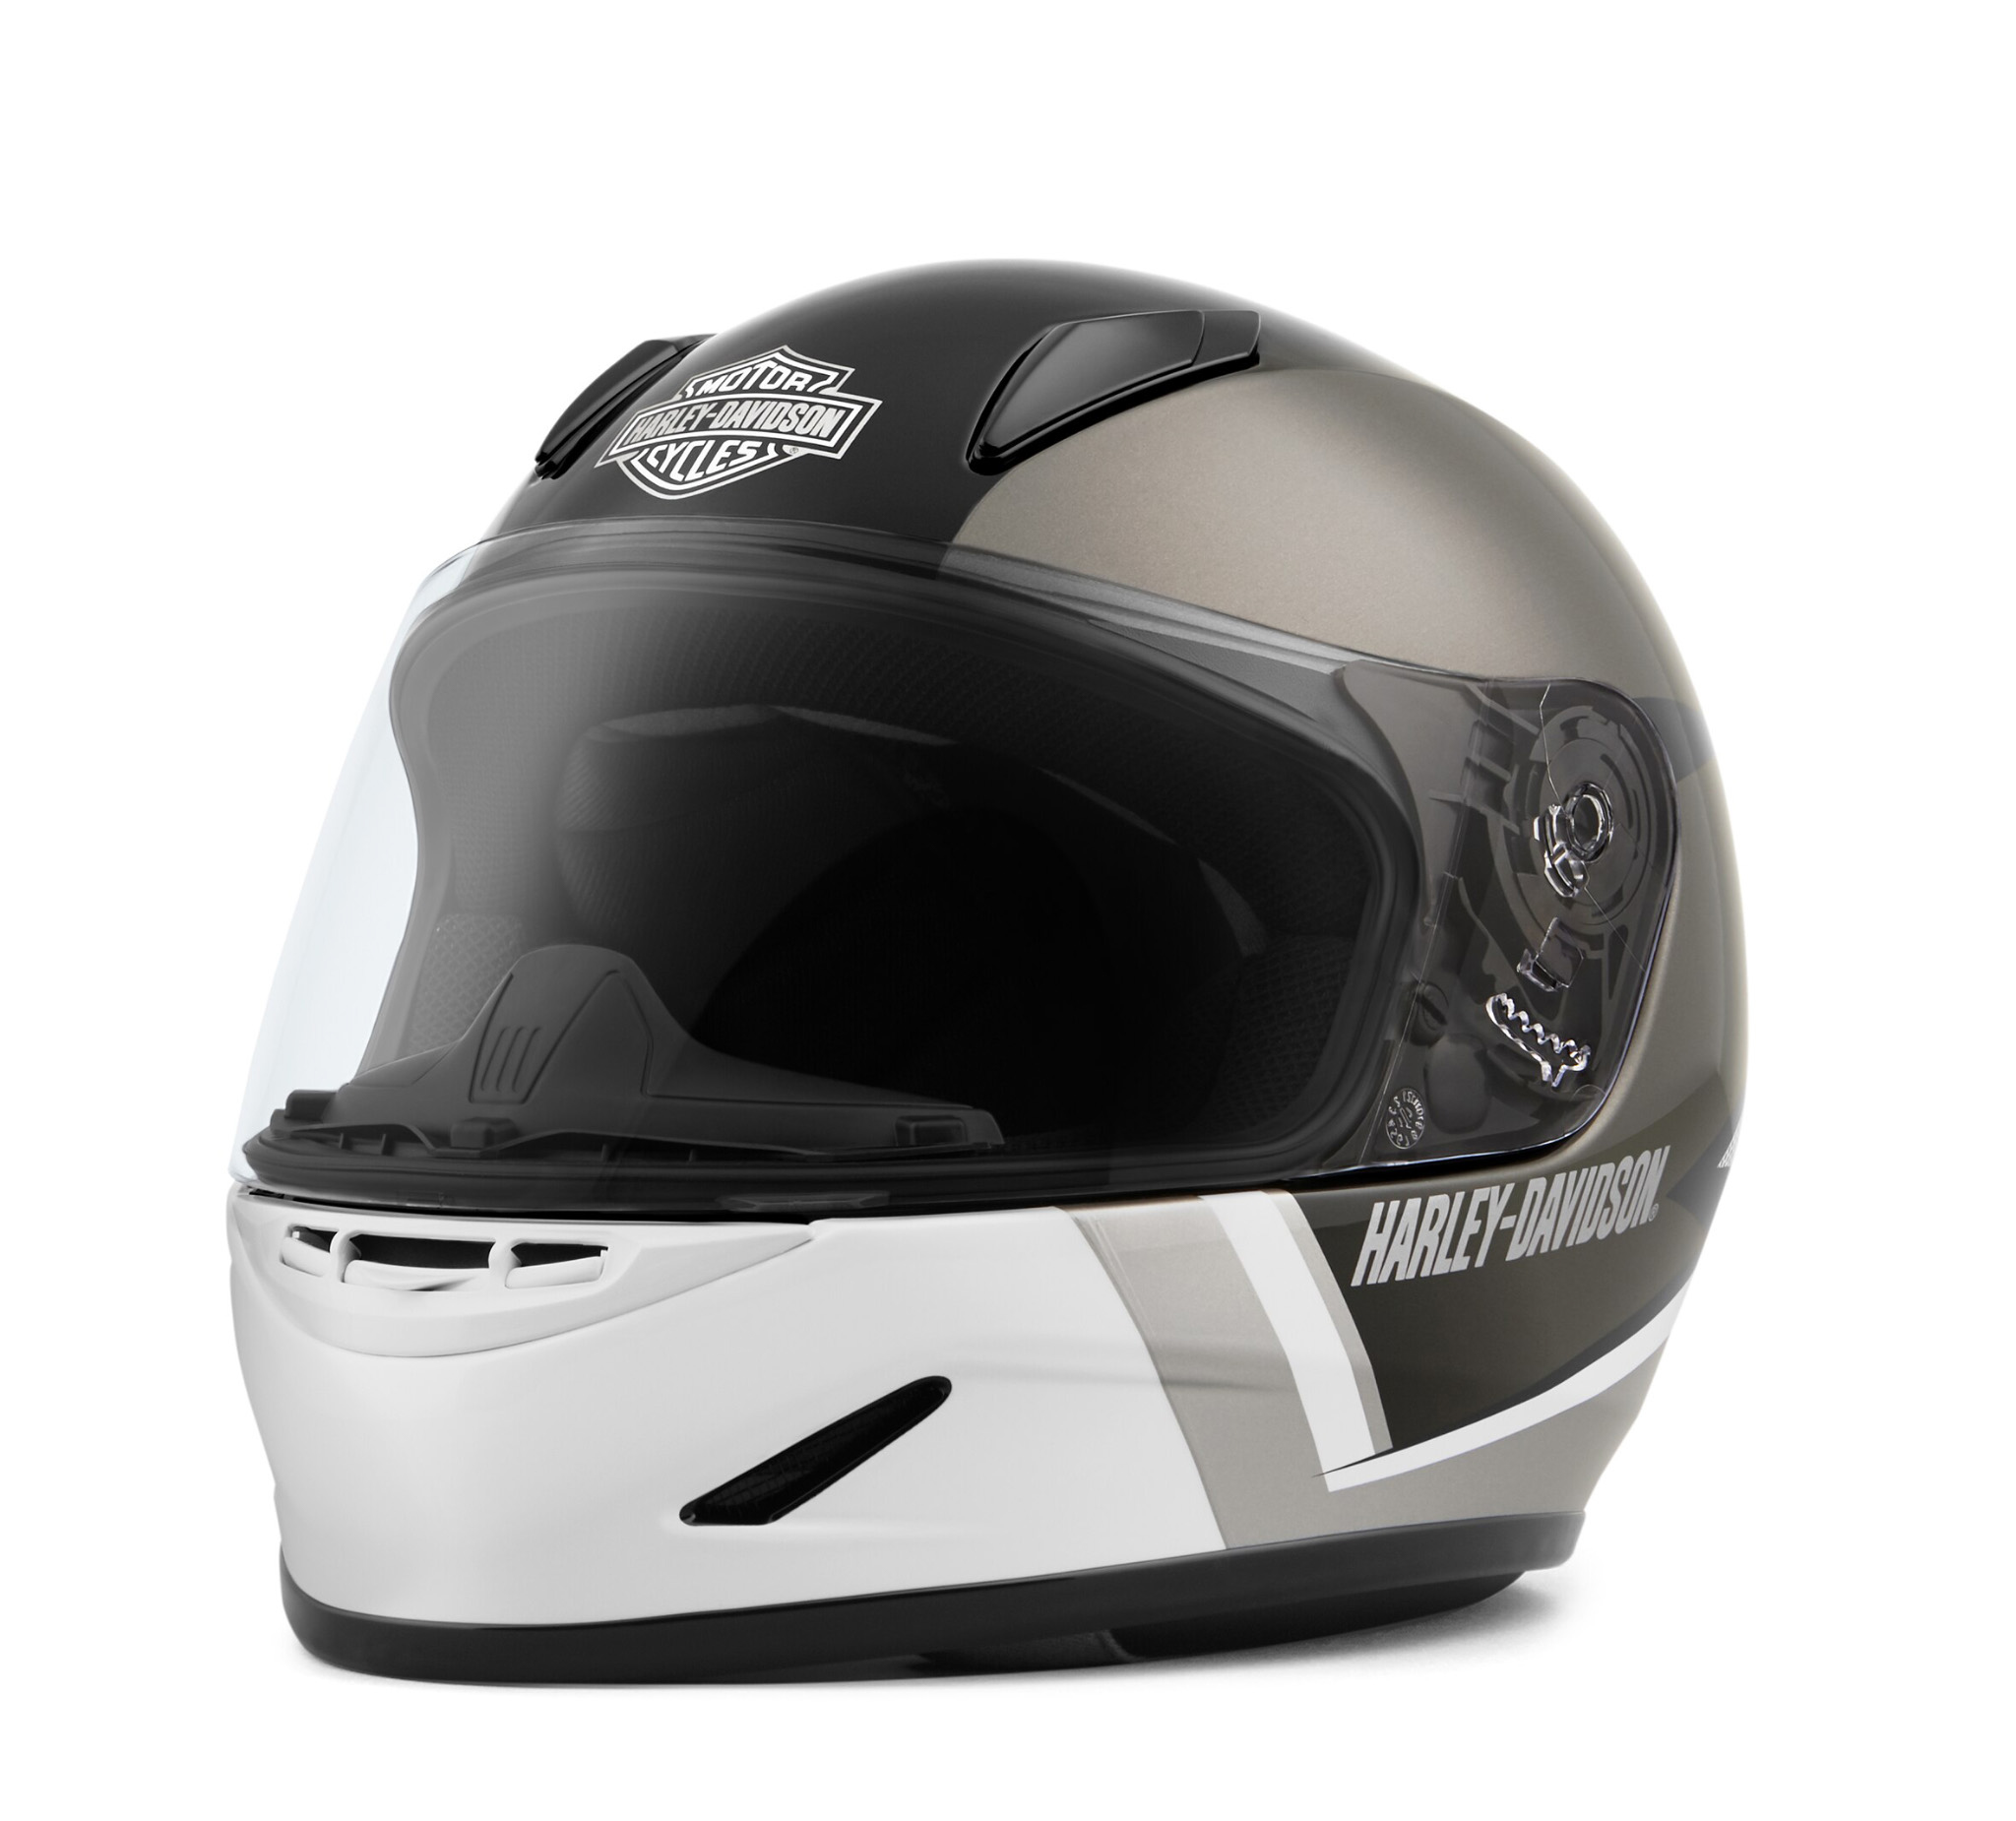 Harley-Davidson Curbside Sun Shield X06 Half Motorcycle Helmet - Black